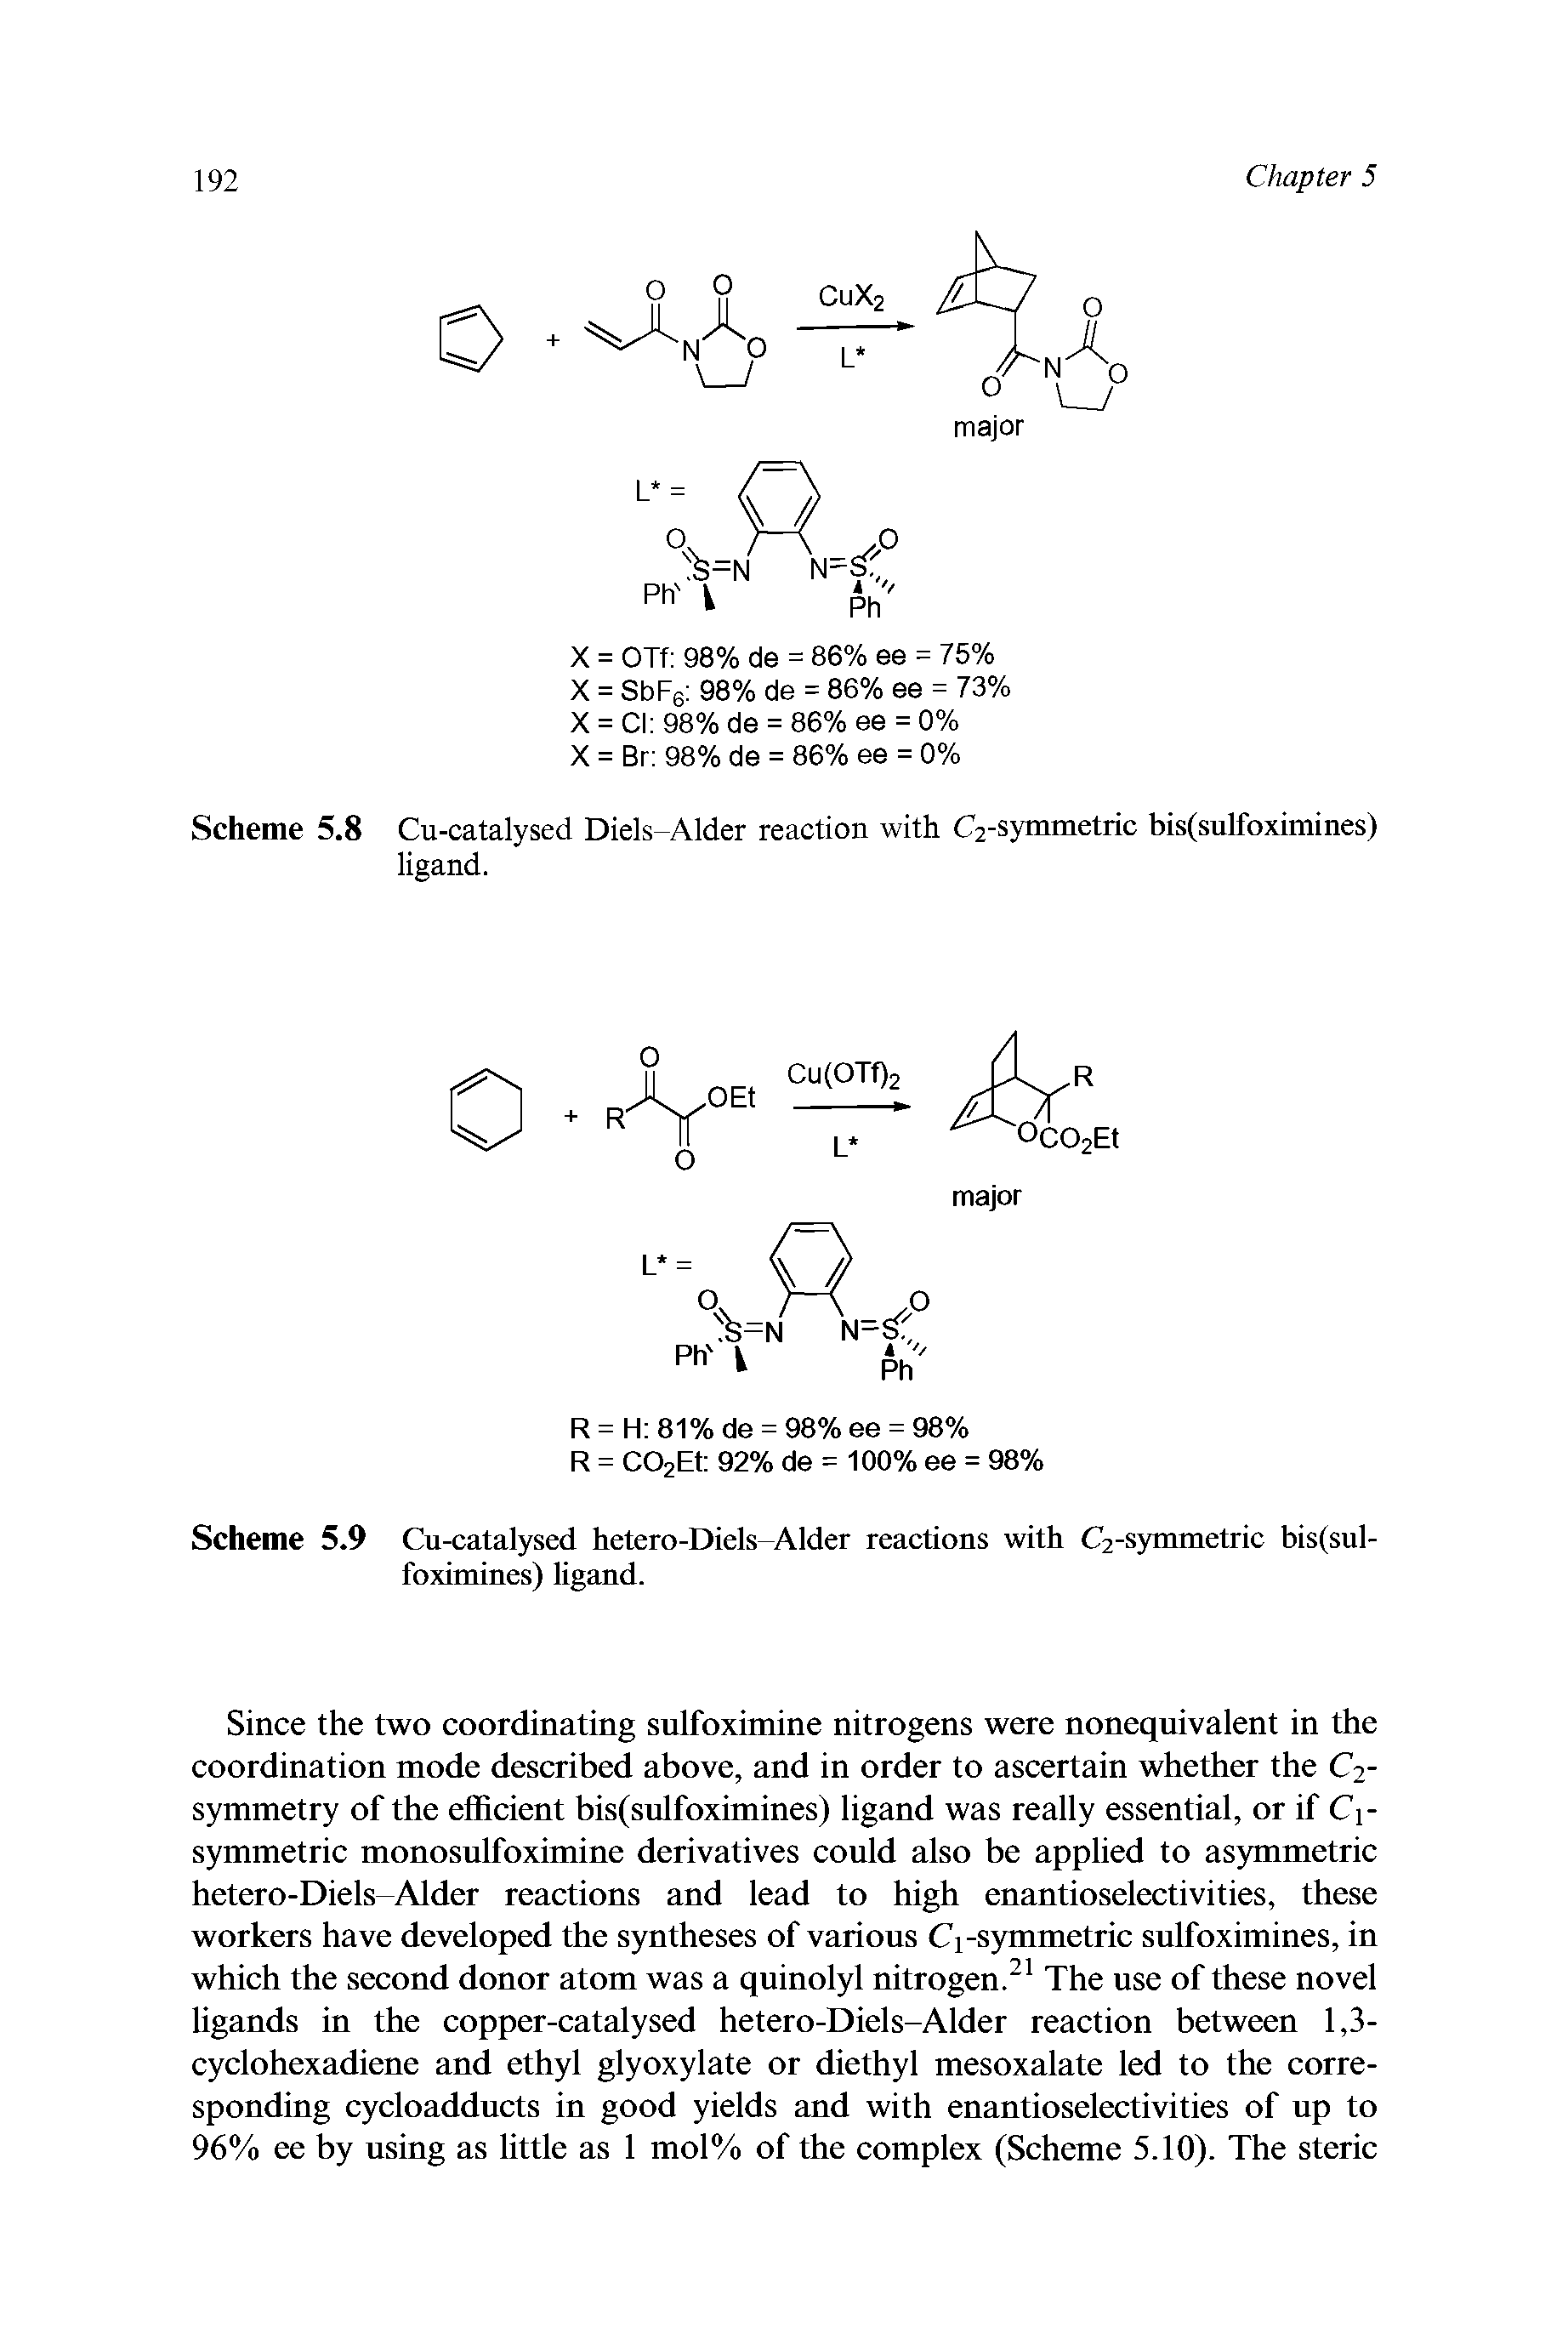 Scheme 5.9 Cu-catalysed hetero-Diels-Alder reactions with C2-symmetric bis(sul-foximines) ligand.